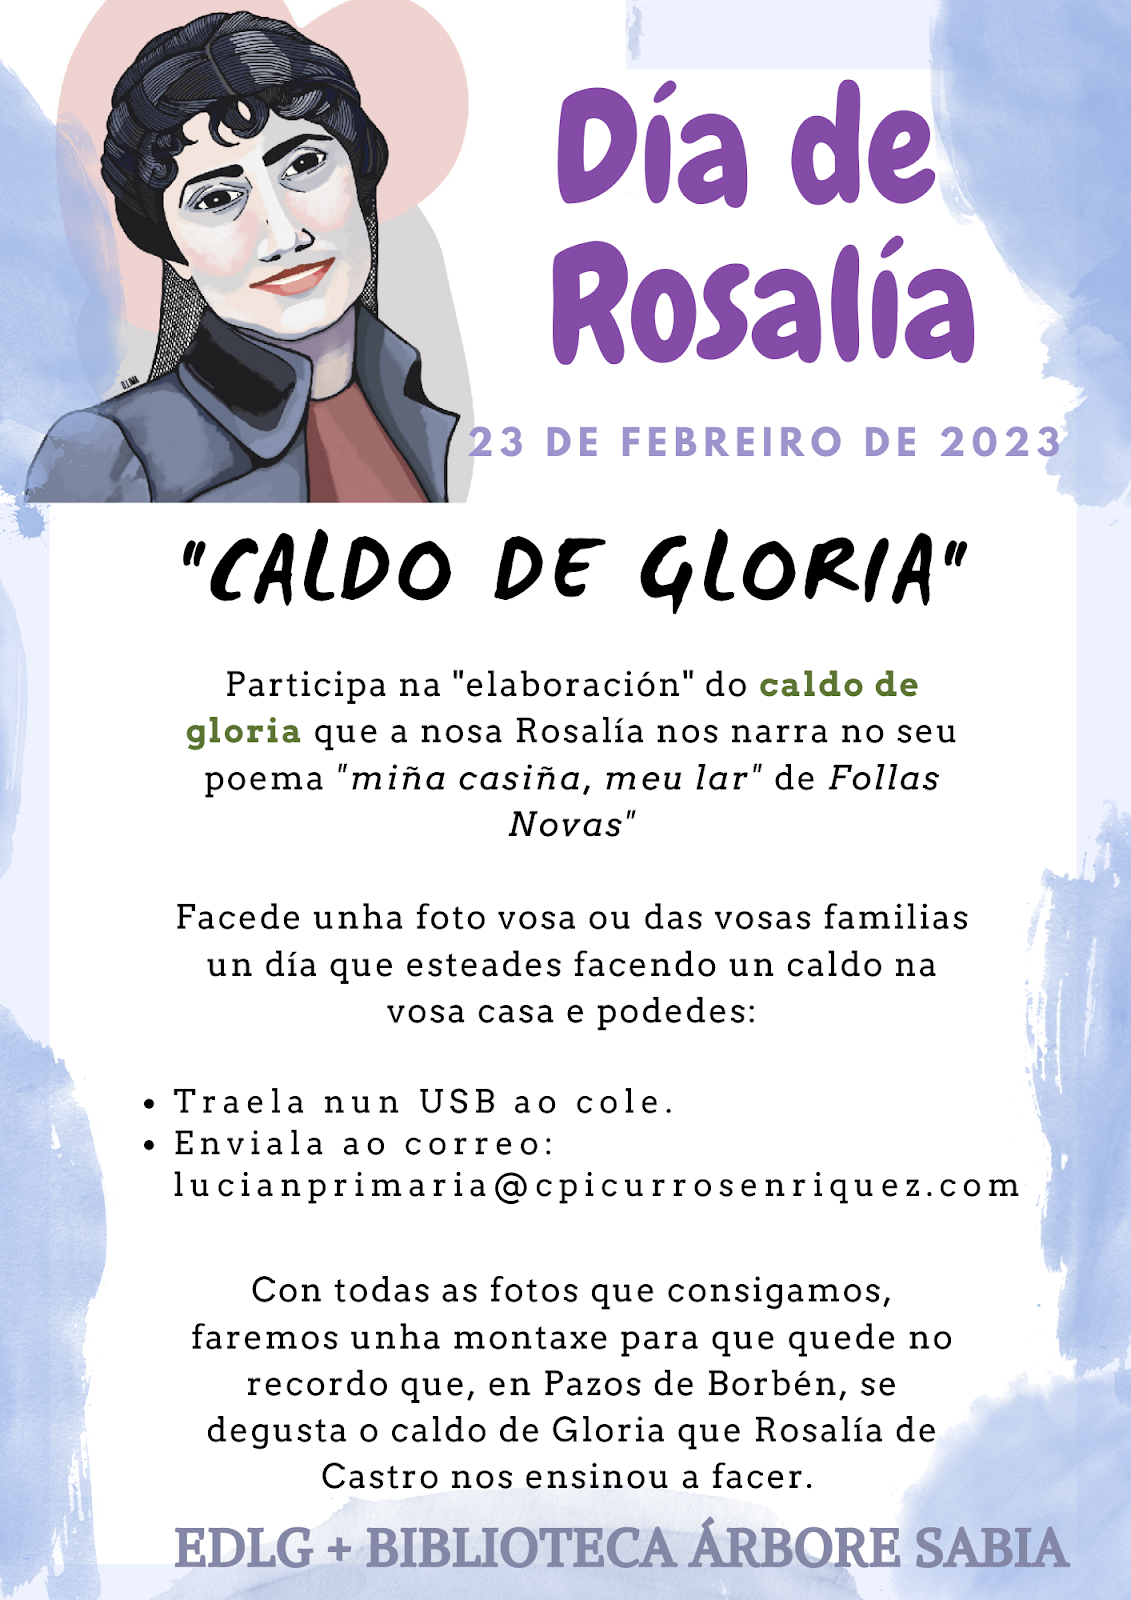 Dia de Rosalia